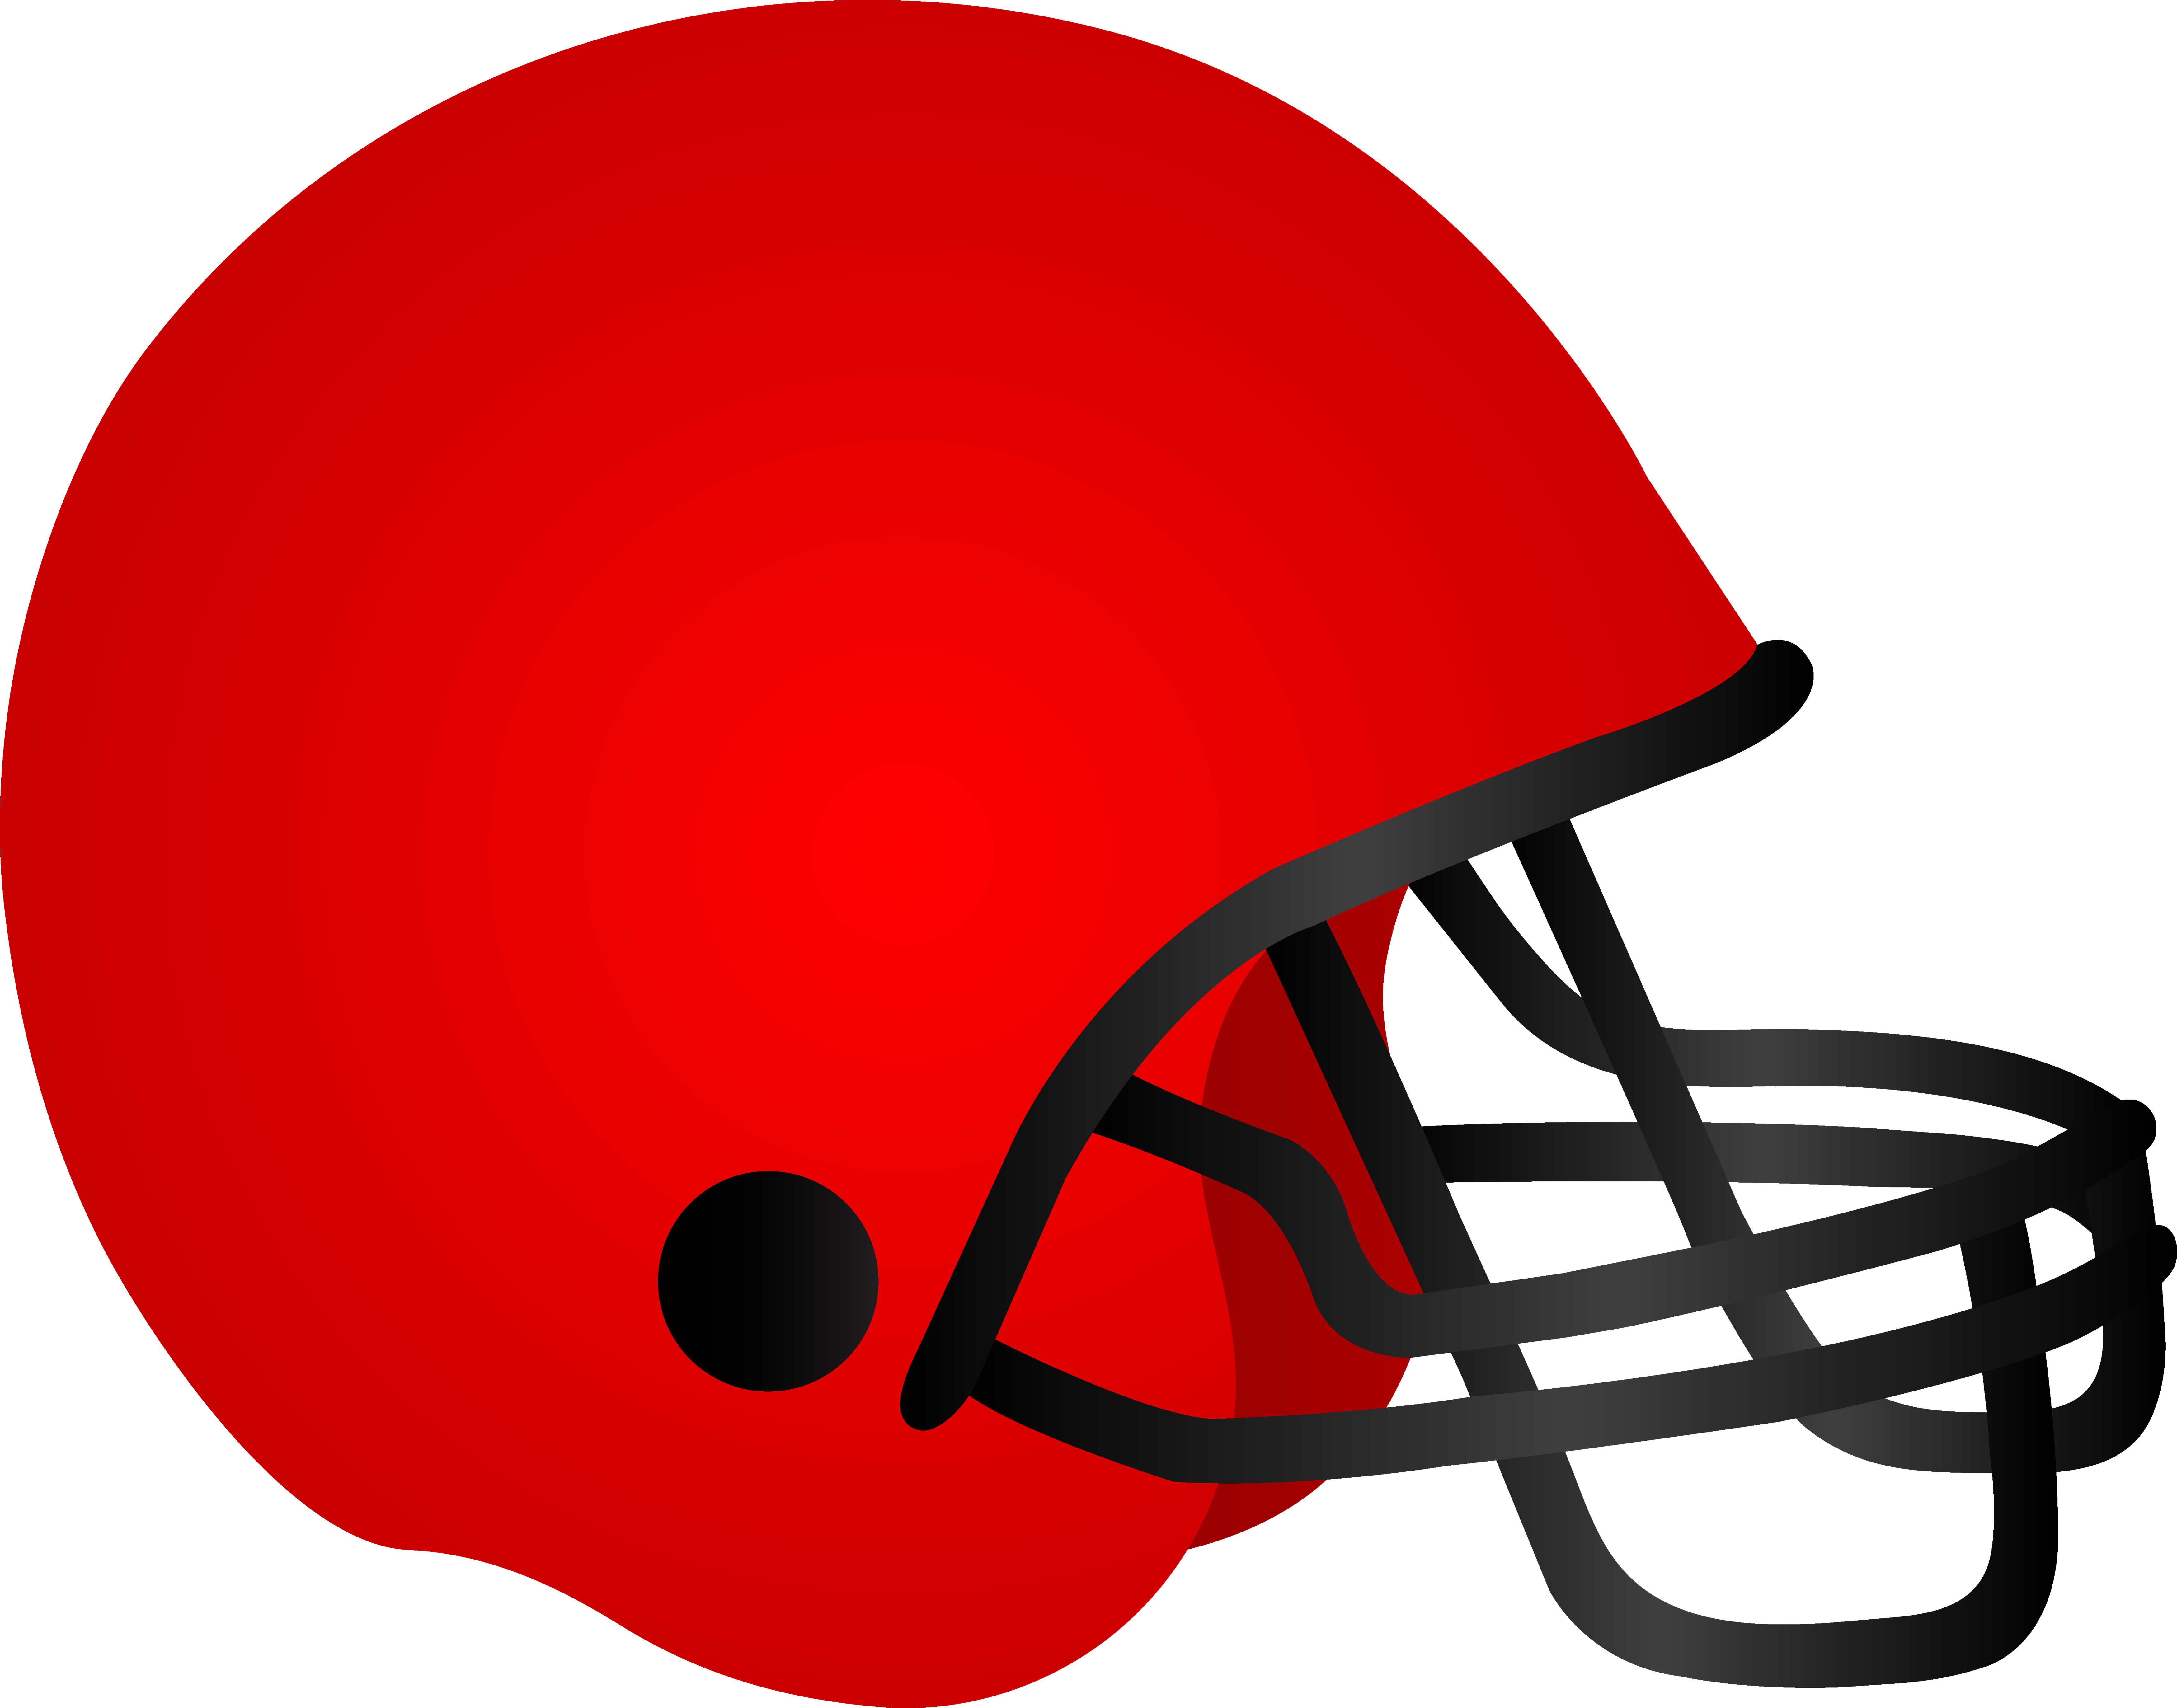 Download Red Football Helmet .